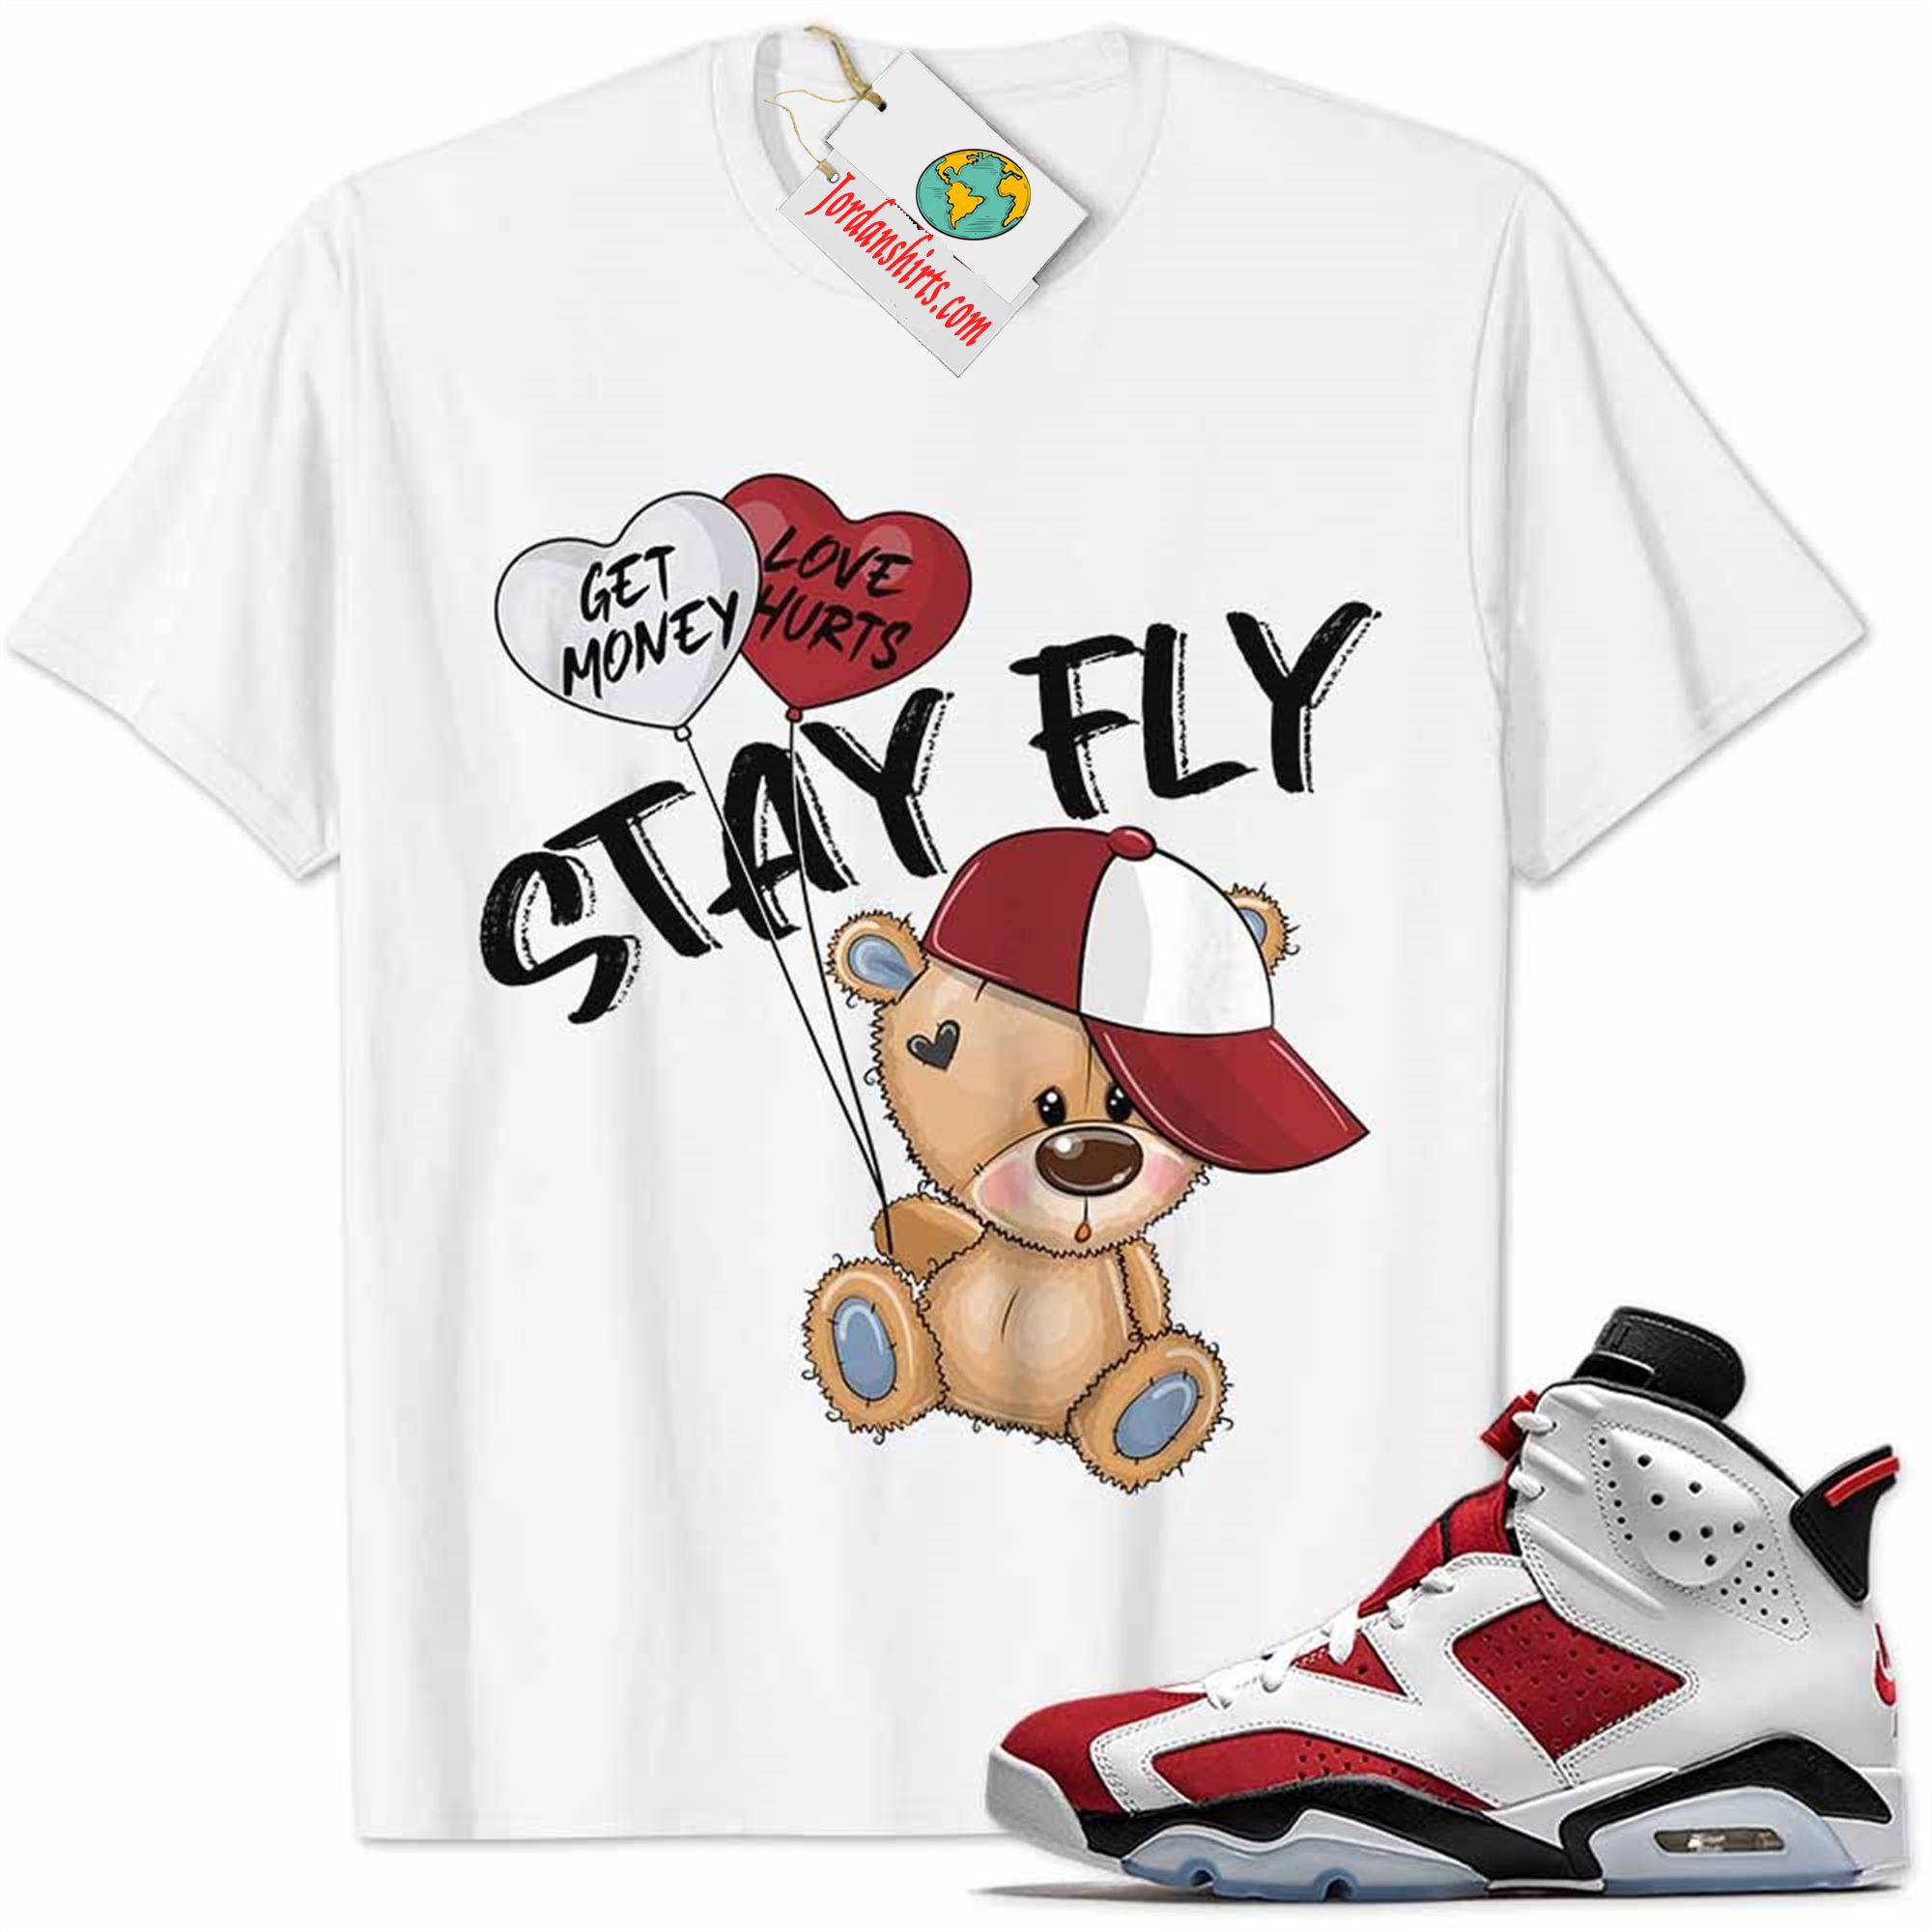 Jordan 6 Shirt, Carmine 6s Shirt Cute Teddy Bear Stay Fly Get Money White Size Up To 5xl